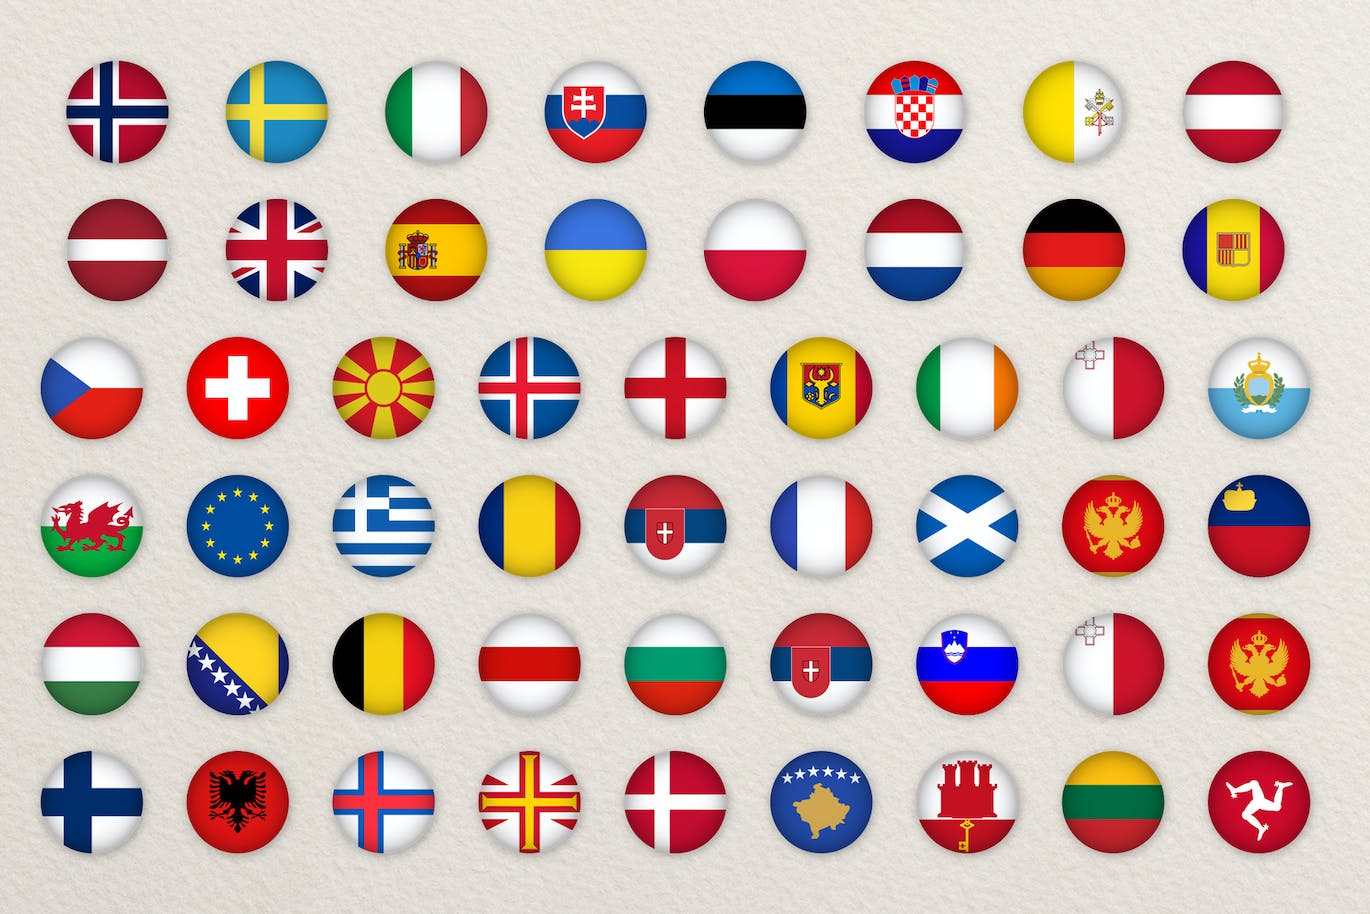 欧洲圆圈国旗系列图标集 Flags Icon Set. Europe Circled Flags Collection 图标素材 第3张